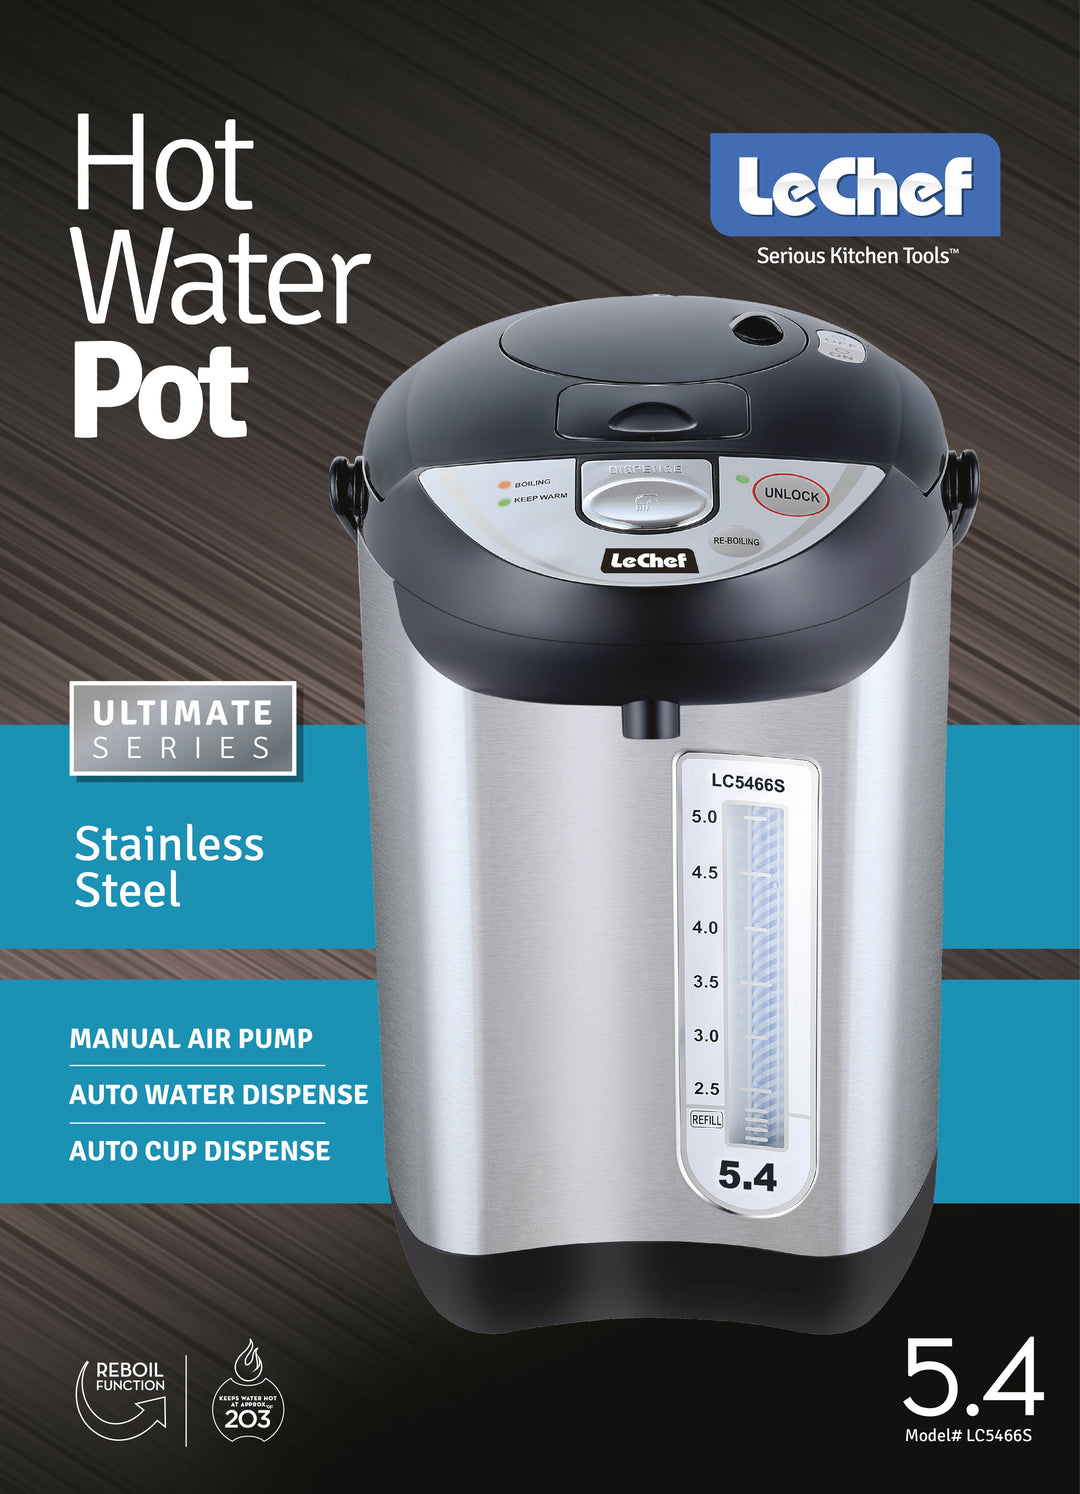 Electric Hot Water Pot